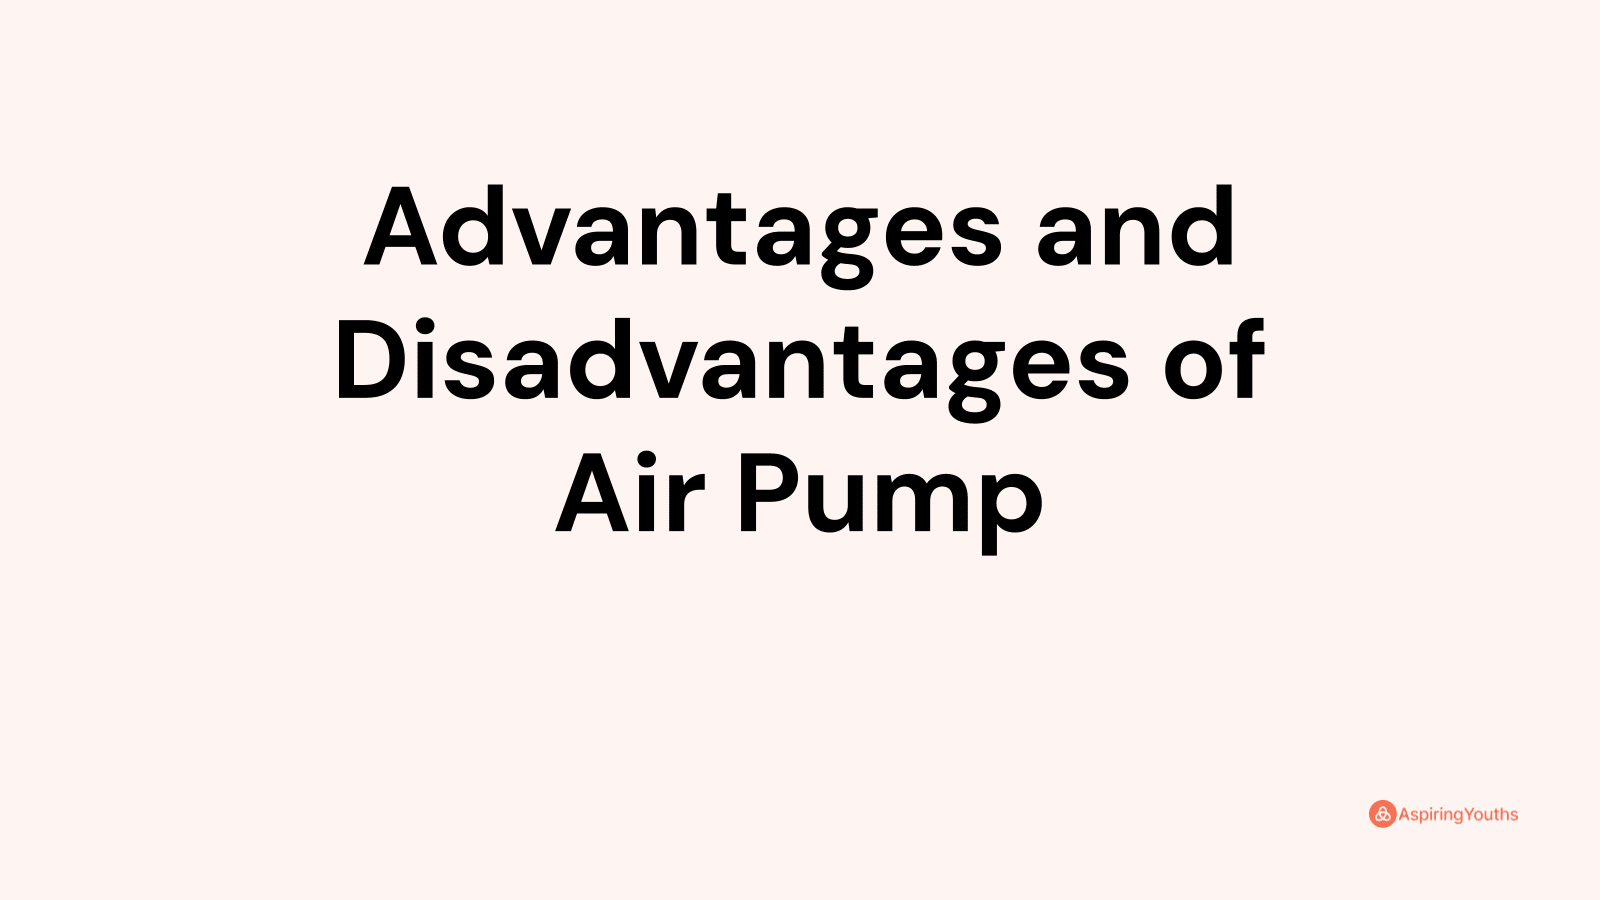 Advantages and disadvantages of Air Pump